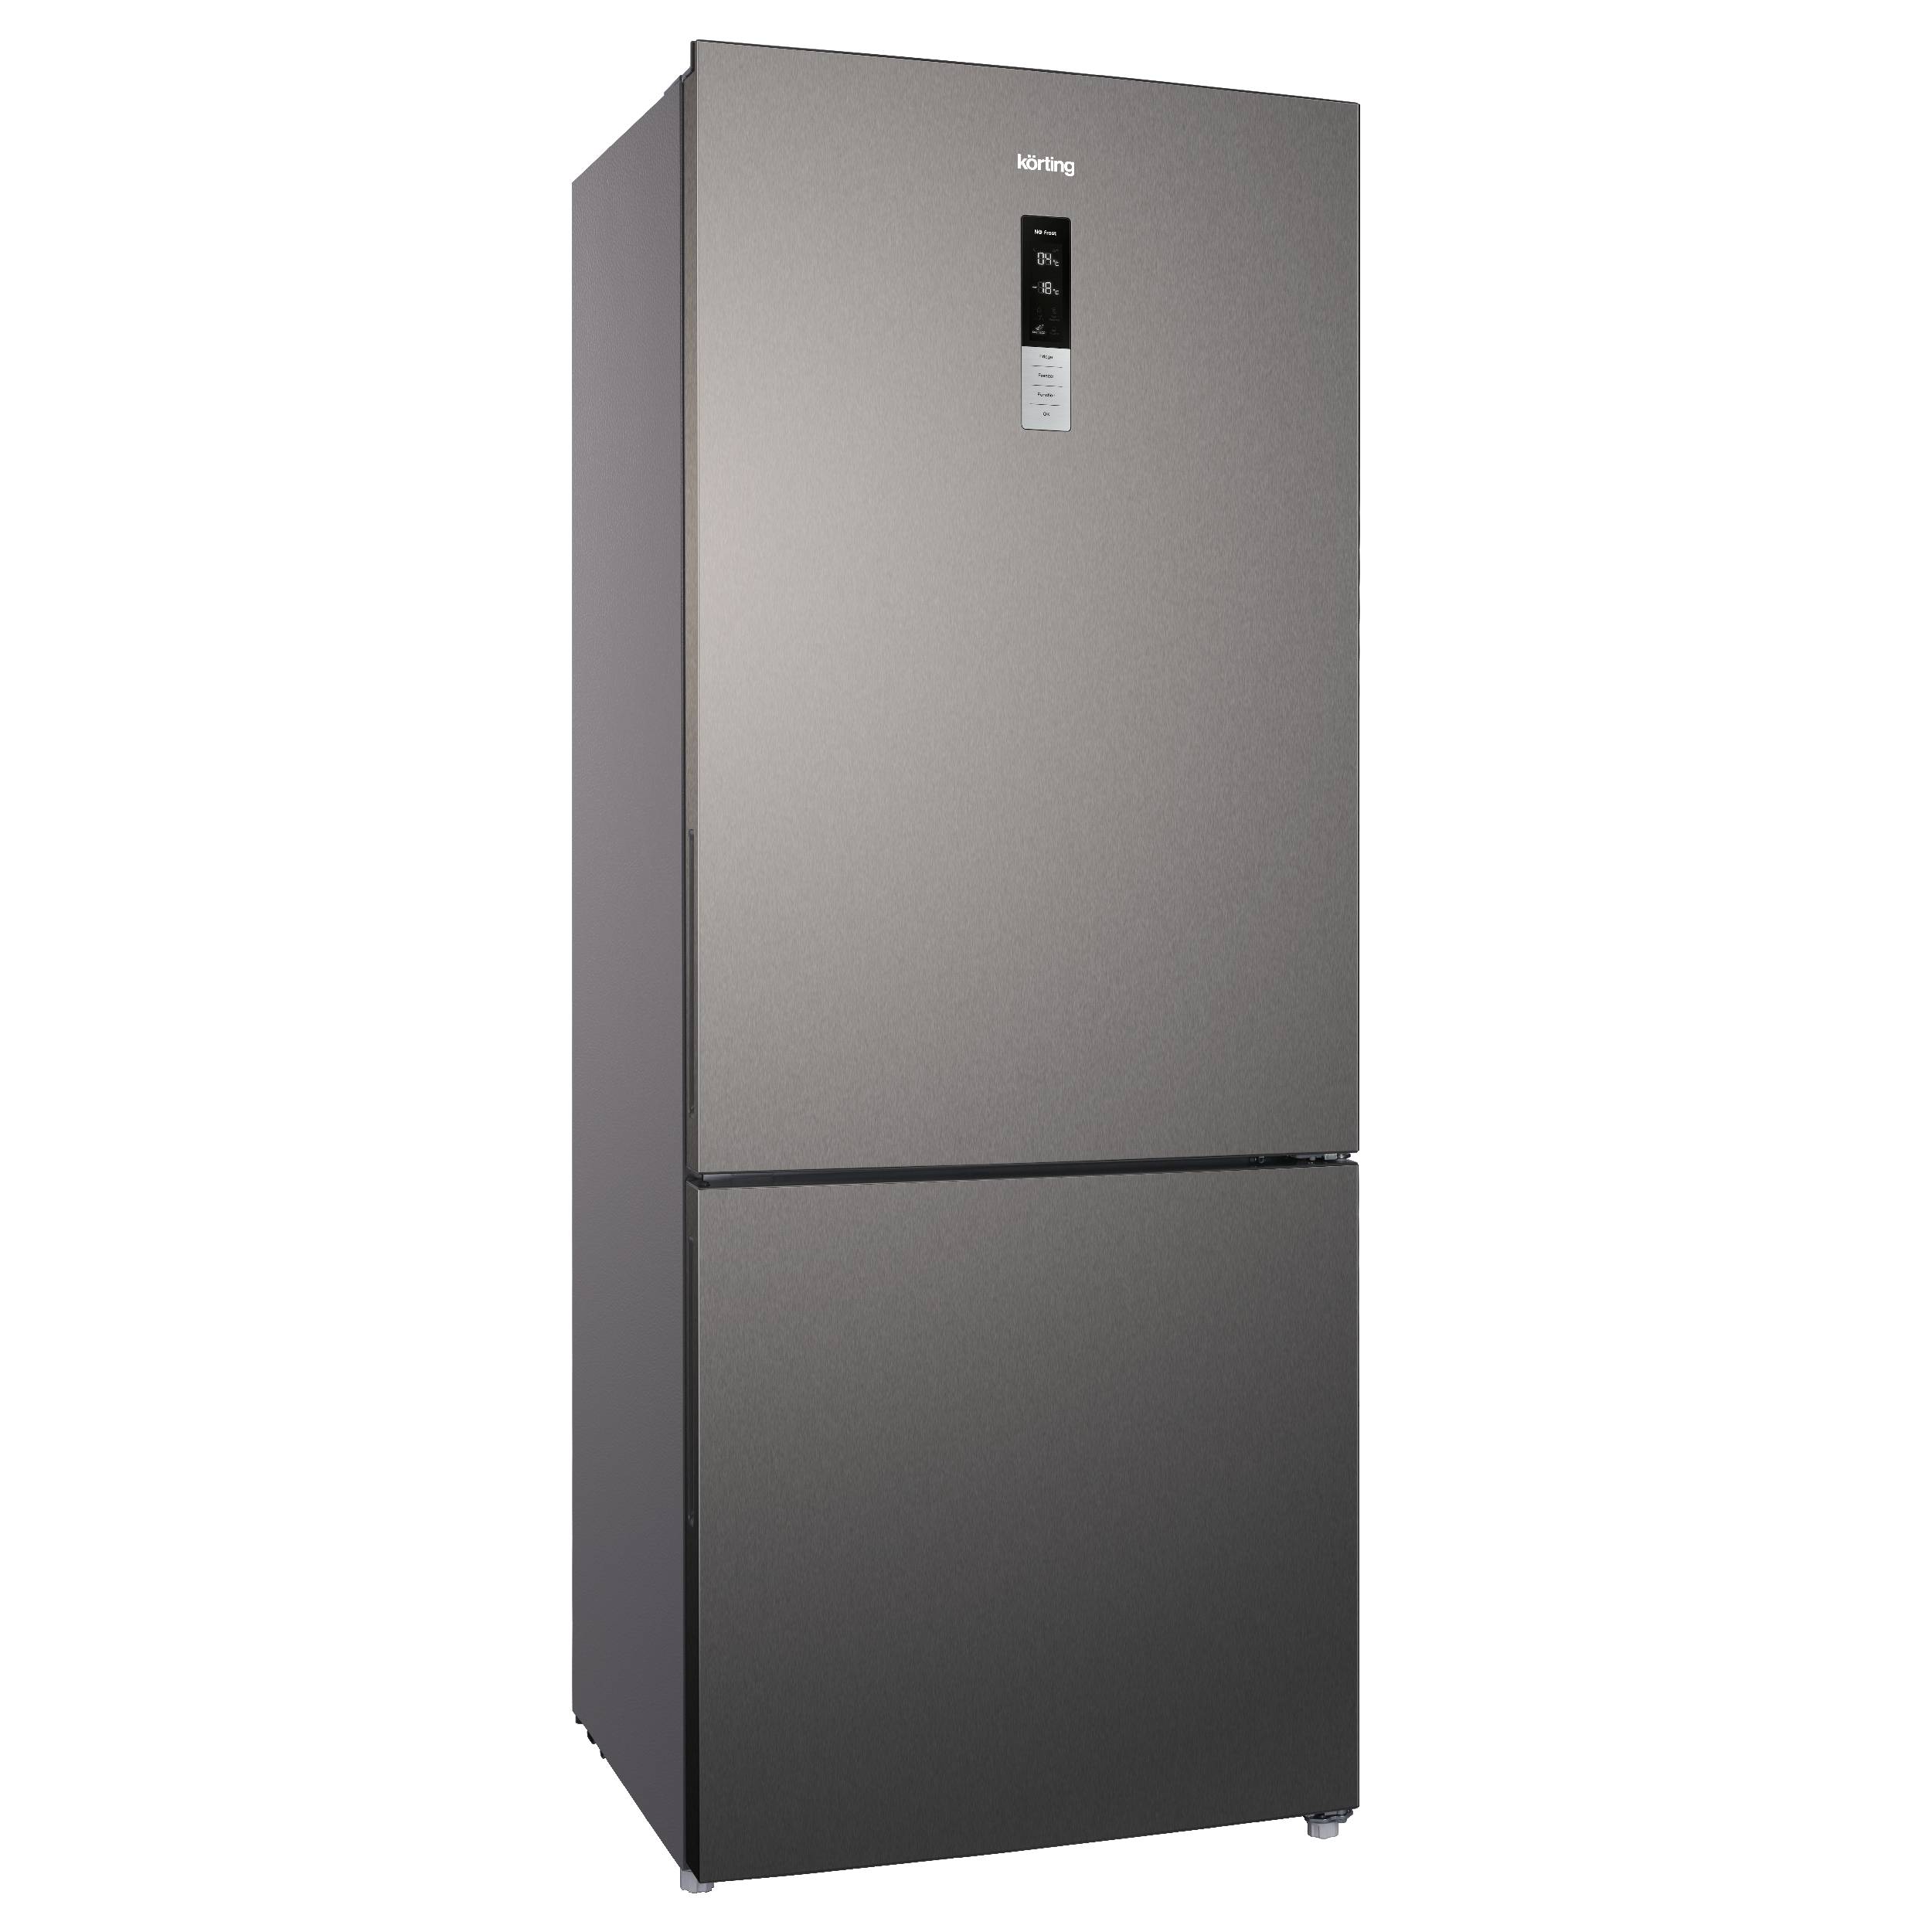 Холодильник Korting KNFC 72337 X серебристый, серый